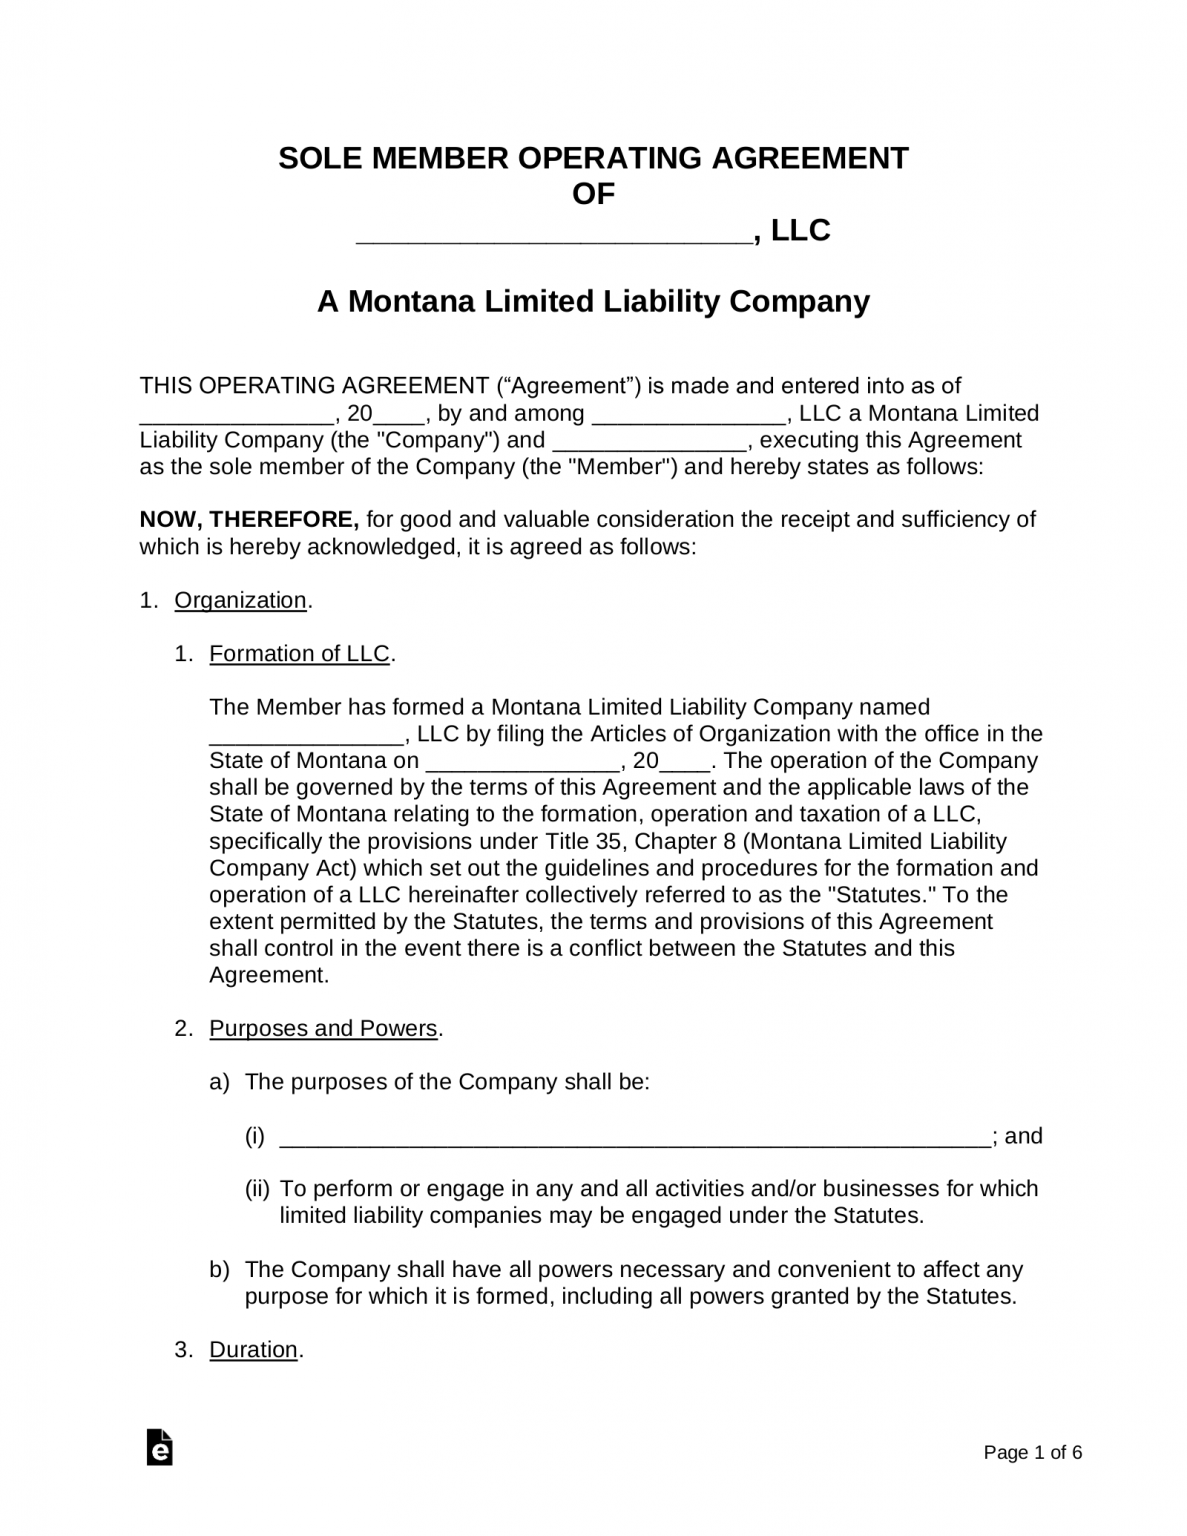 free-montana-single-member-llc-operating-agreement-form-pdf-word